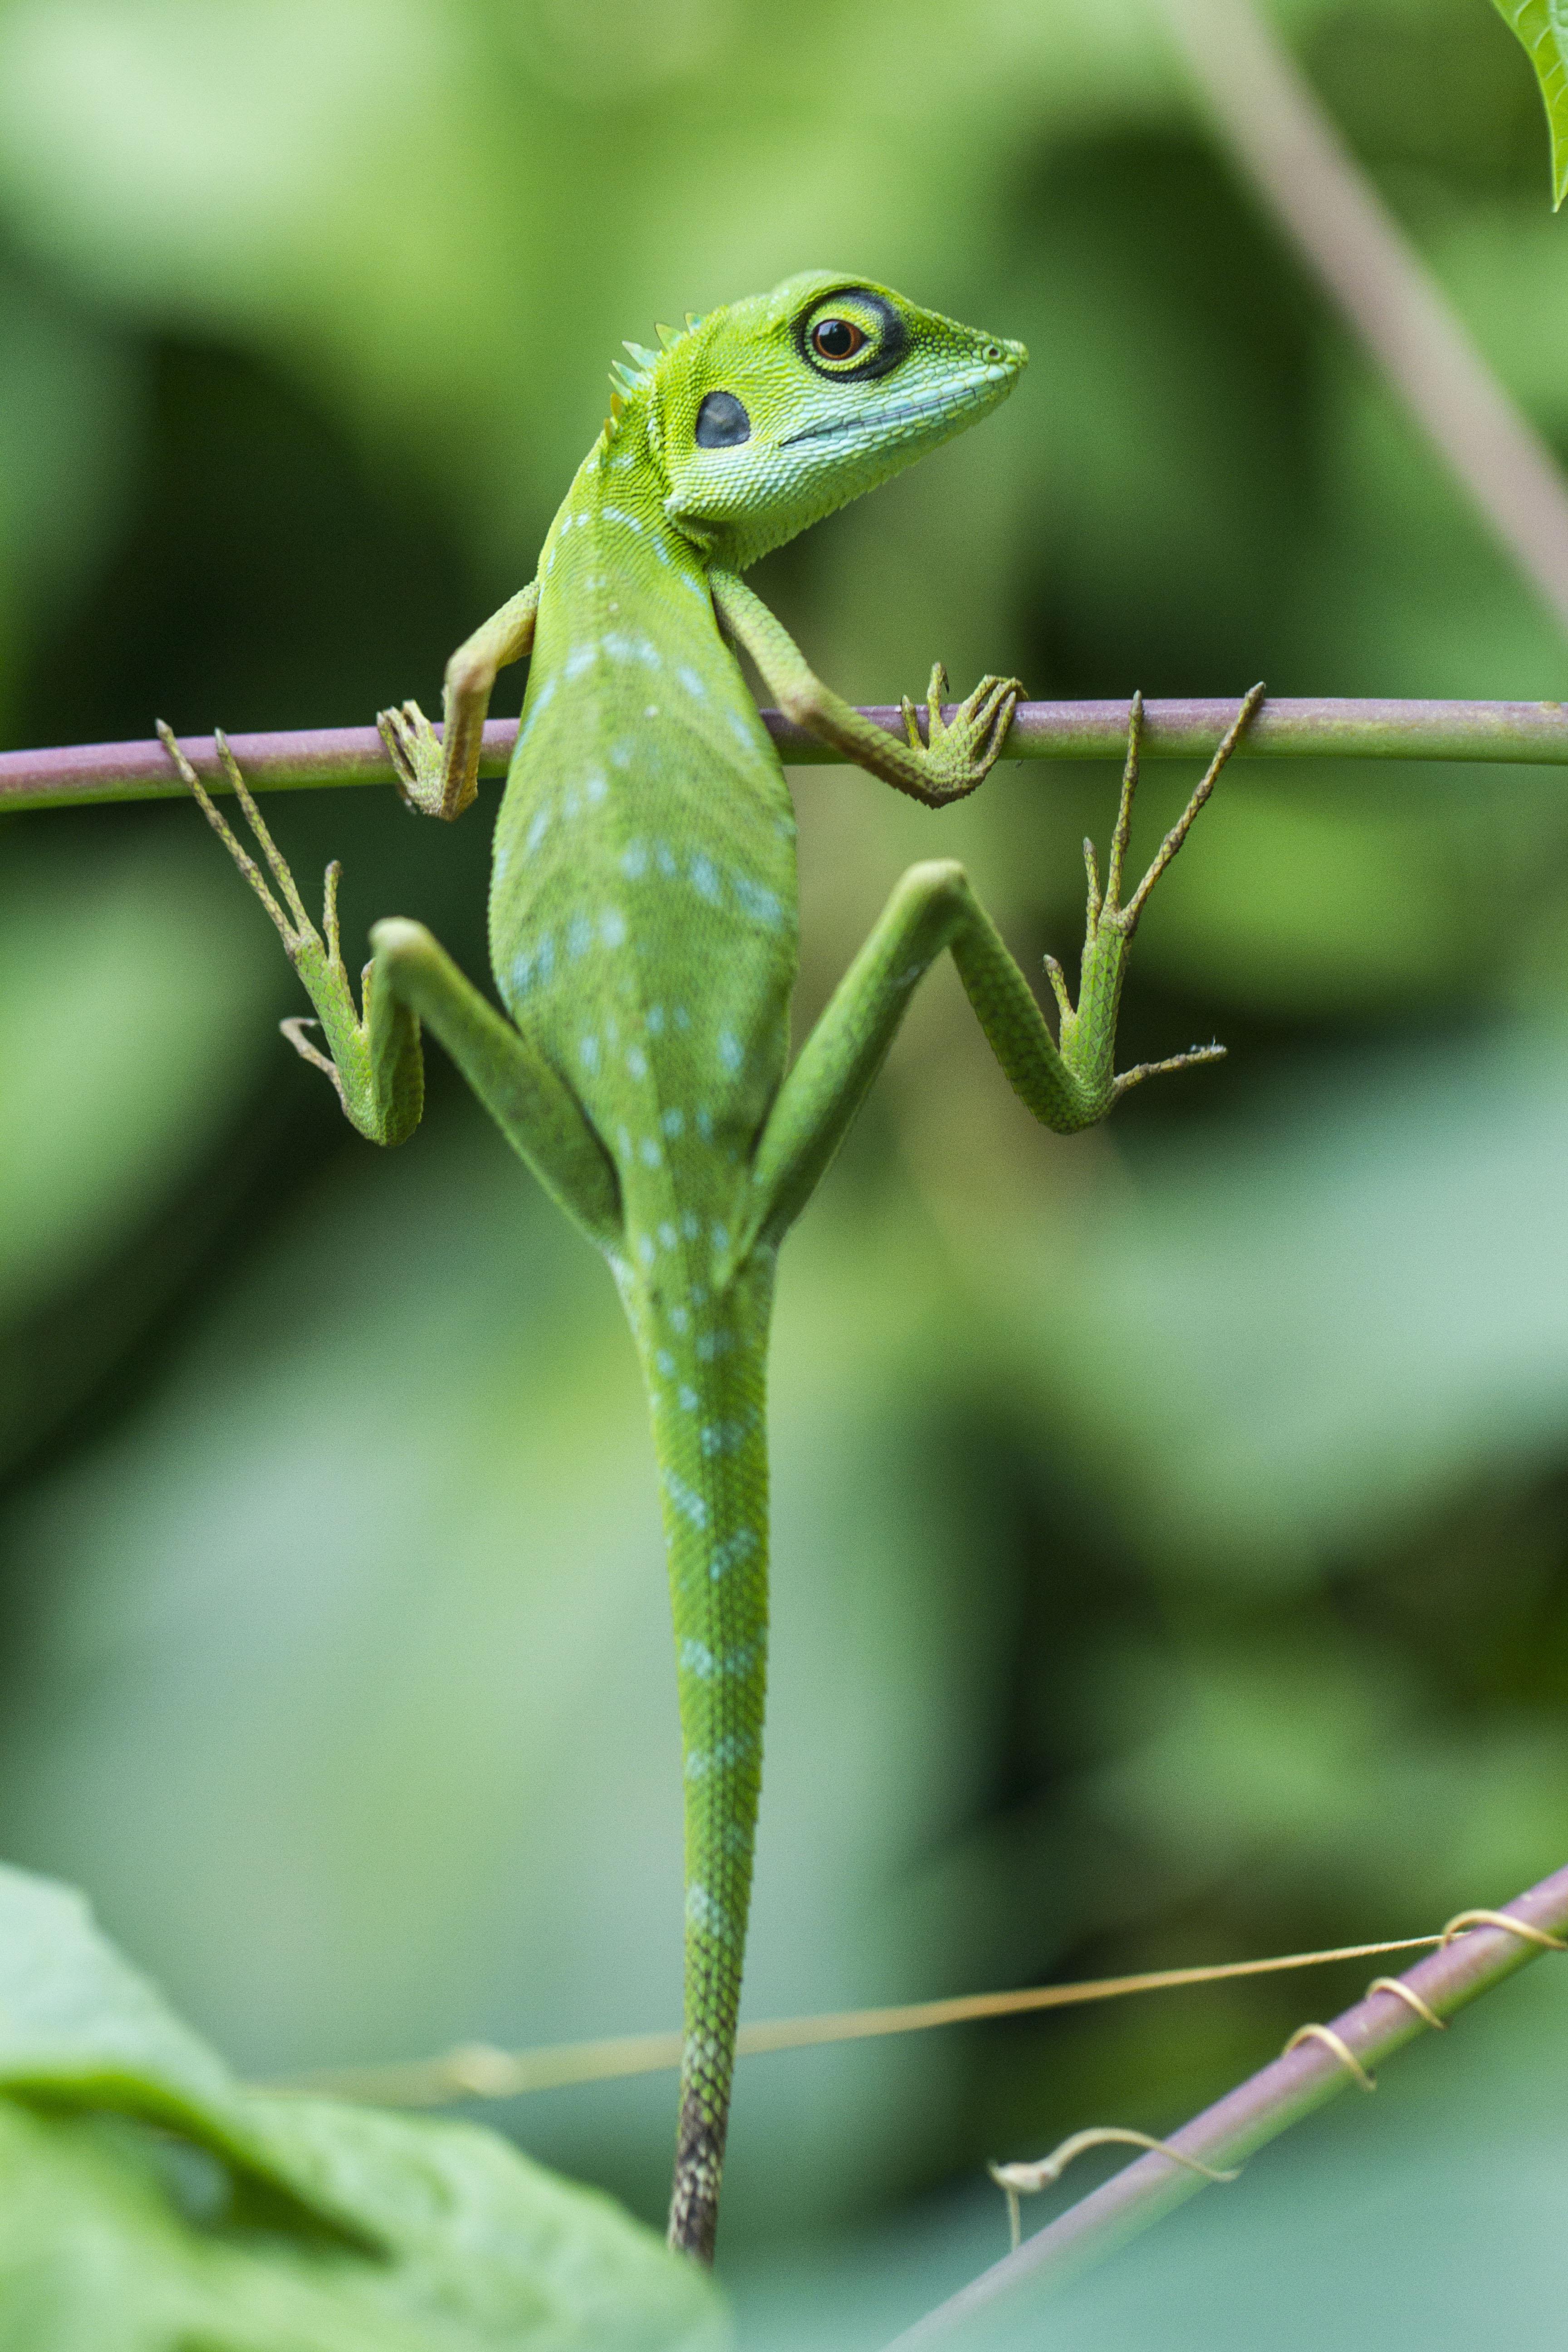 Lizard hanging on branch